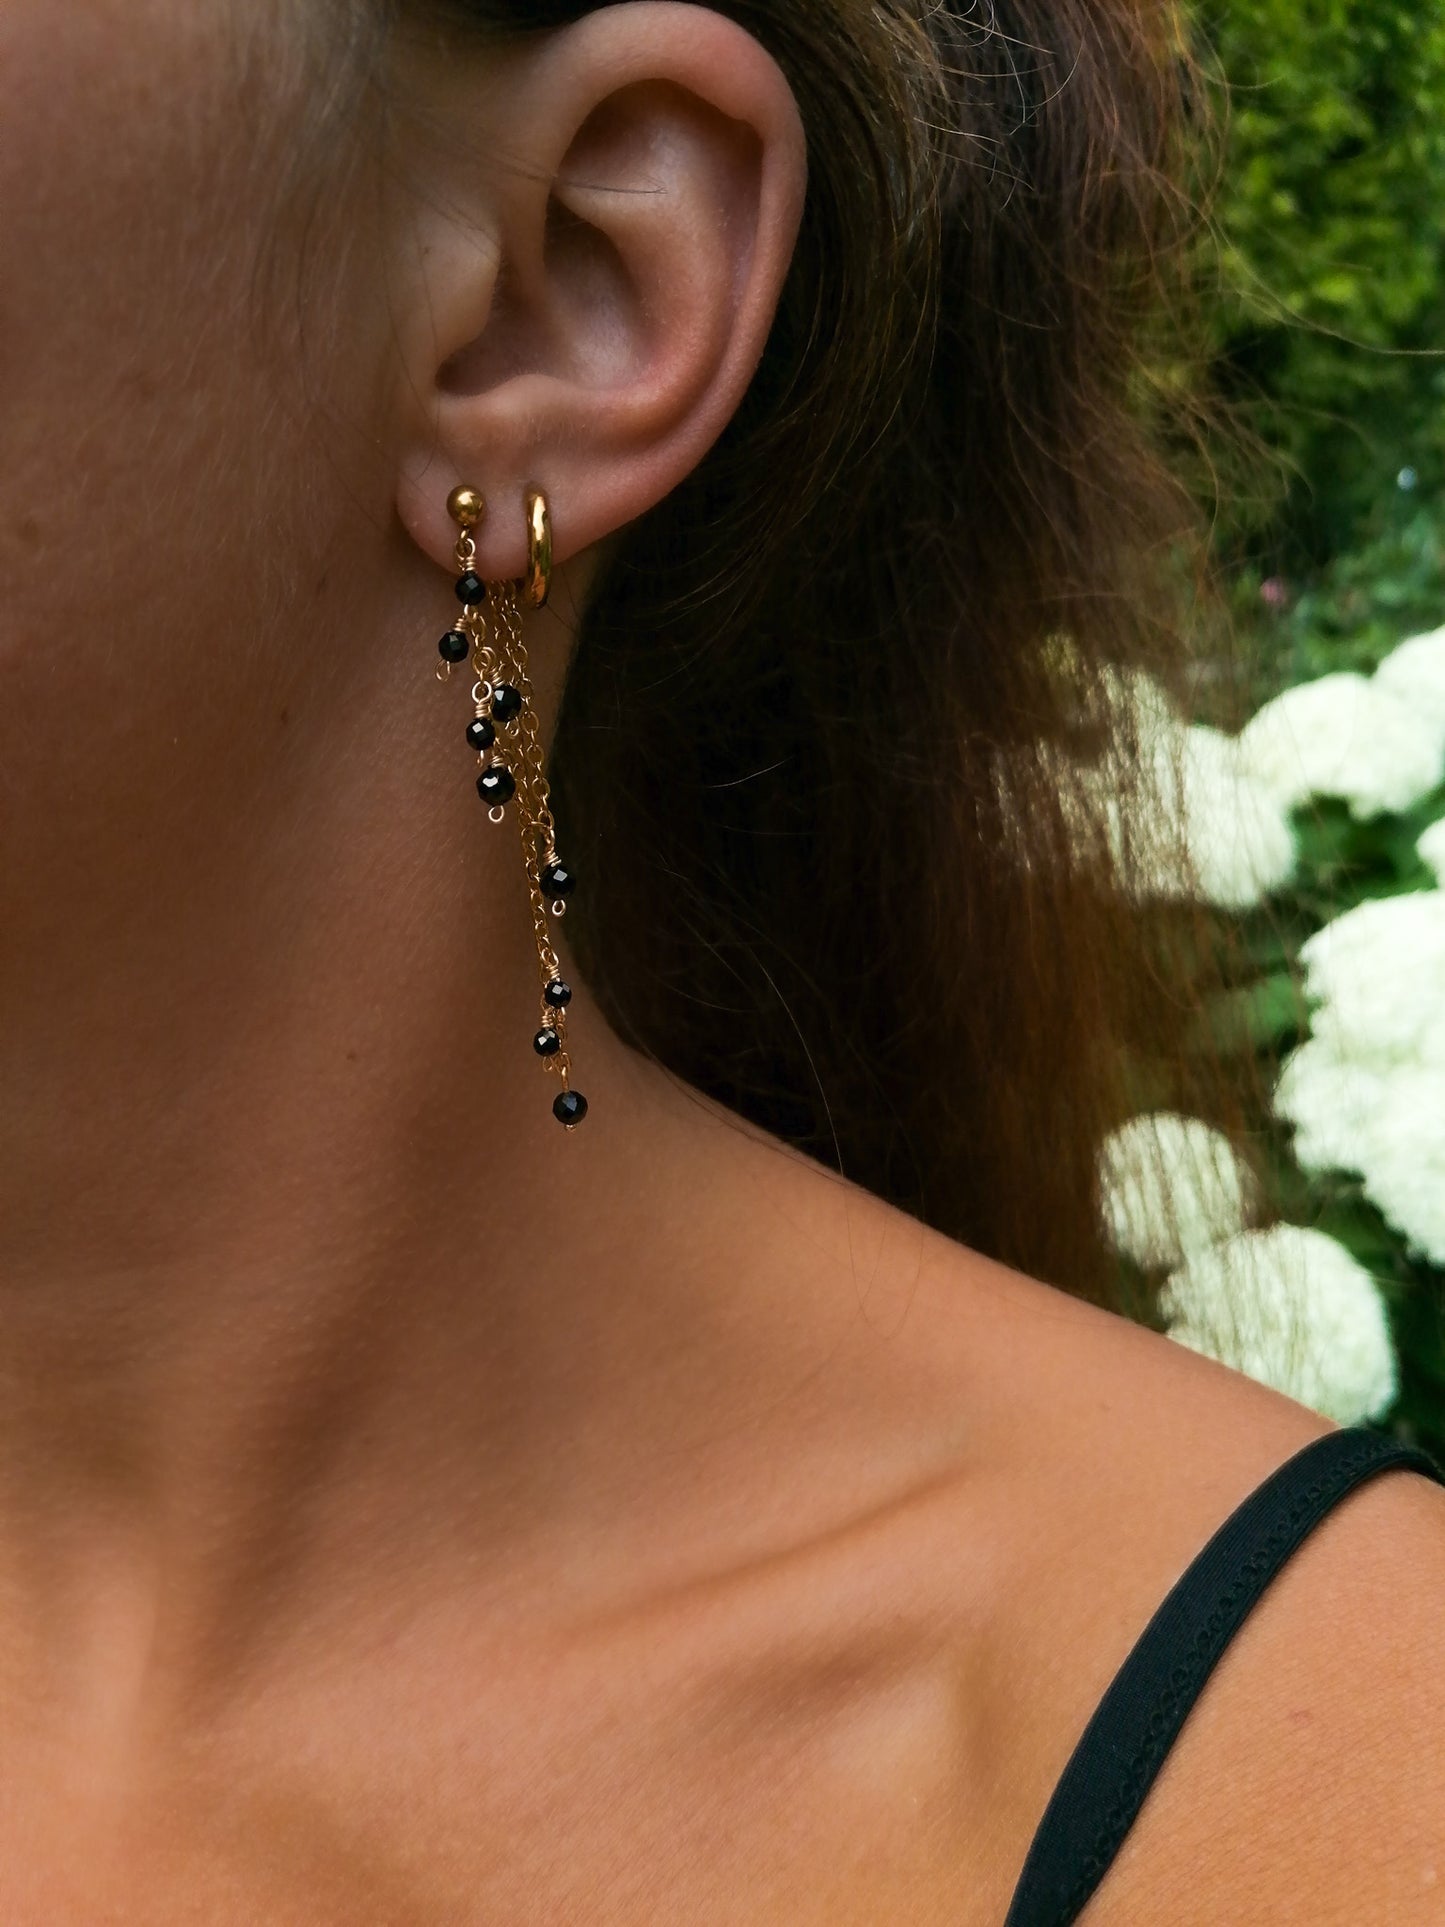 Heidi earrings - black spinel